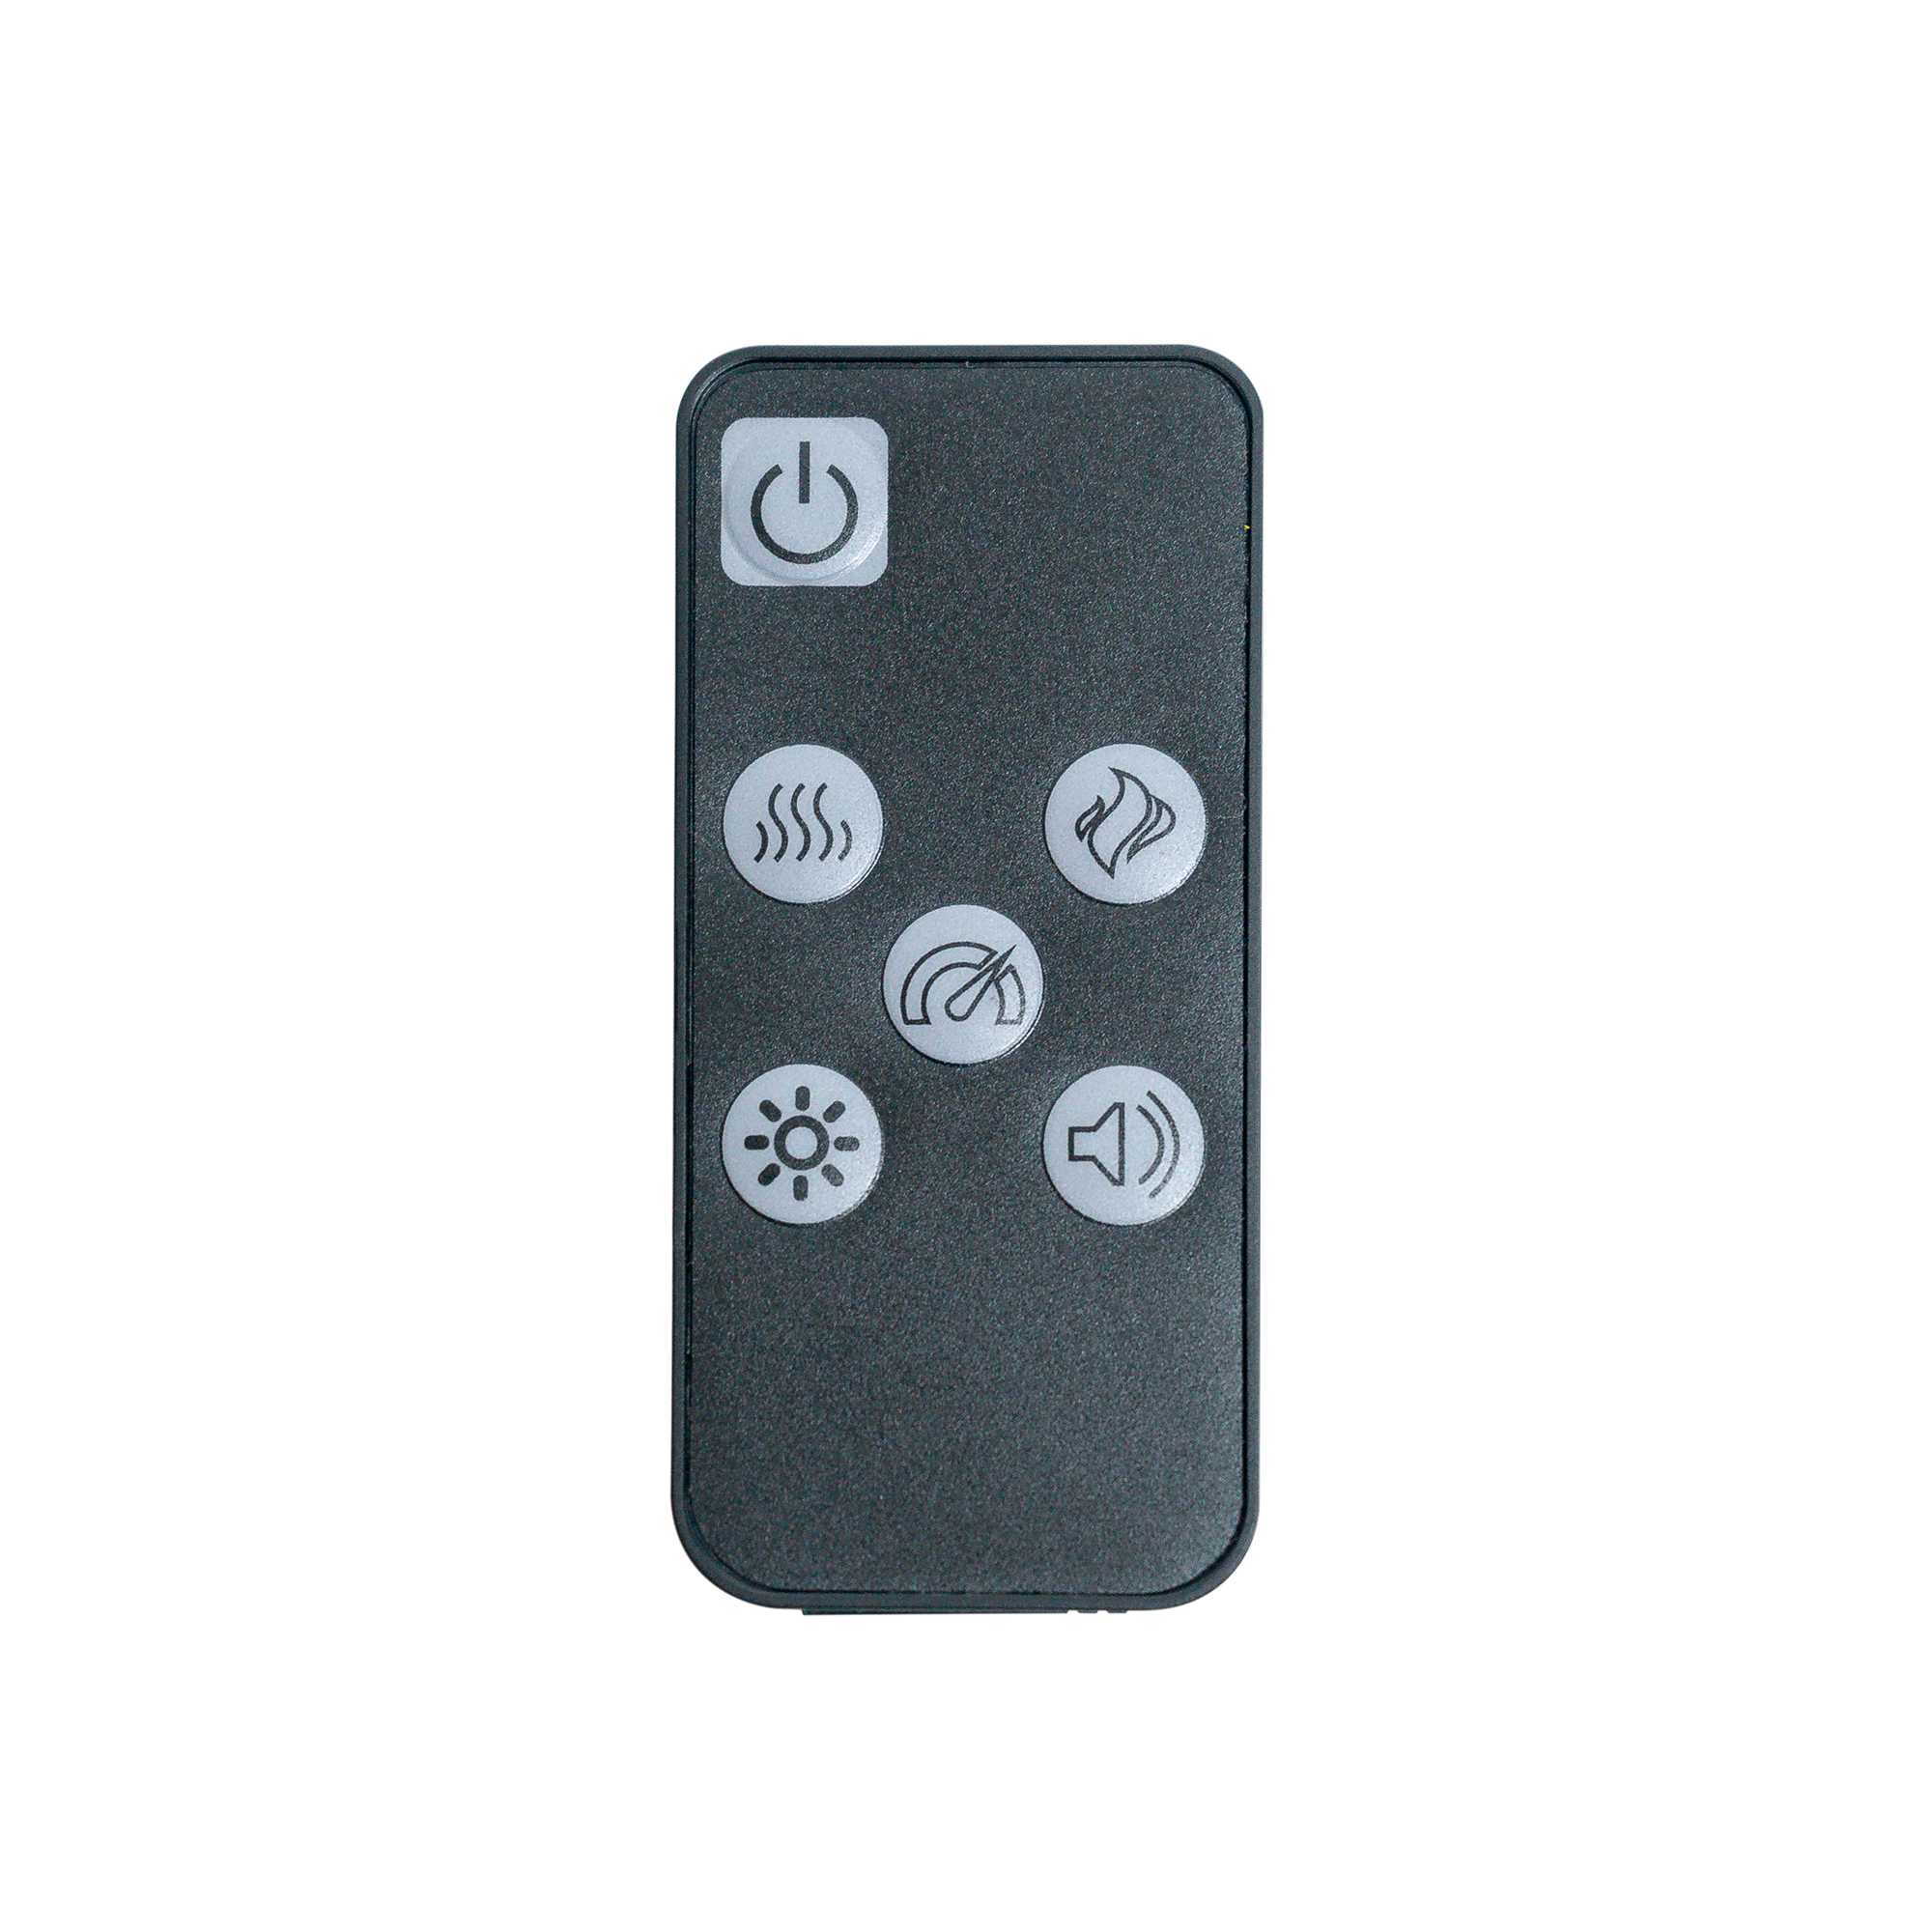 Cardivik remote control Handset